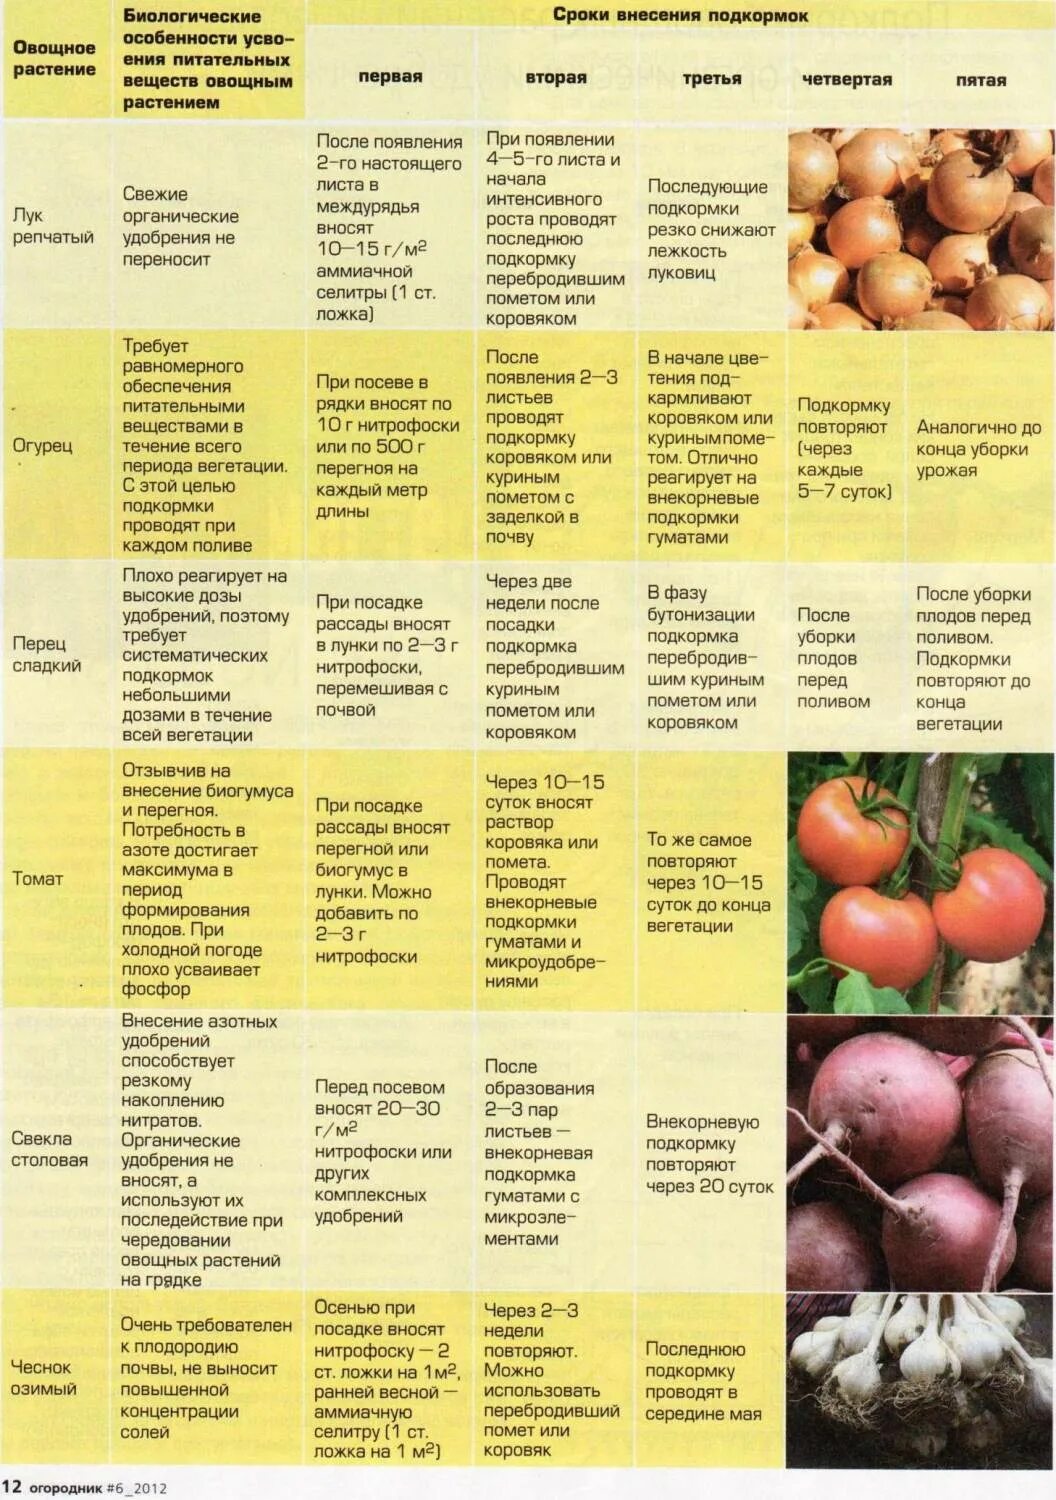 Какие овощи подкармливают. Таблица удобрений для растений в саду. Таблица подкормок овощей органическими удобрениями. Подкормка овощей удобрениями таблица. Таблица подкормки растений томаты.